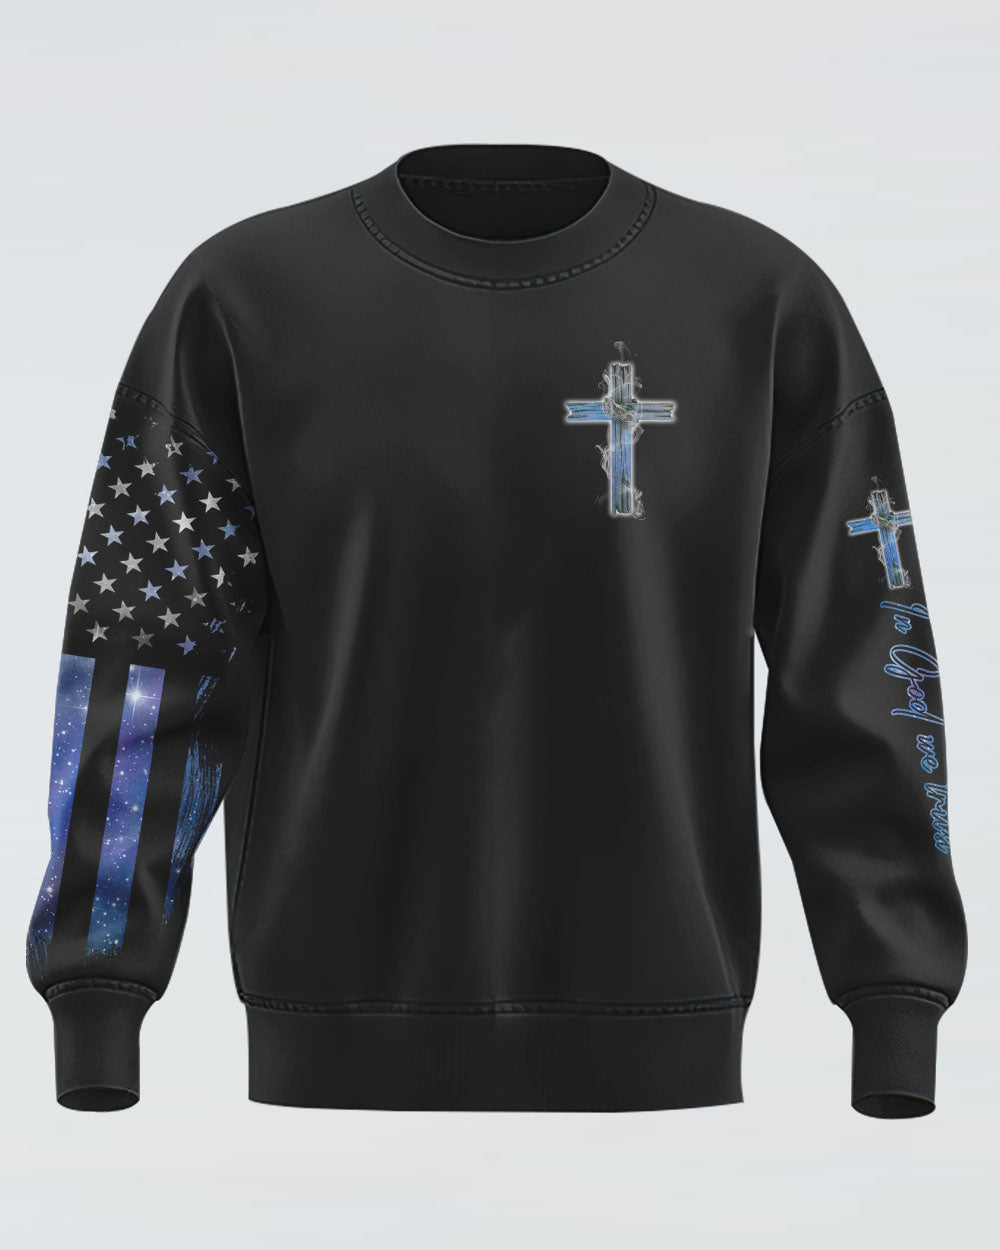 Faith Jesus Cross Galaxy Flag Women's Christian Sweatshirt